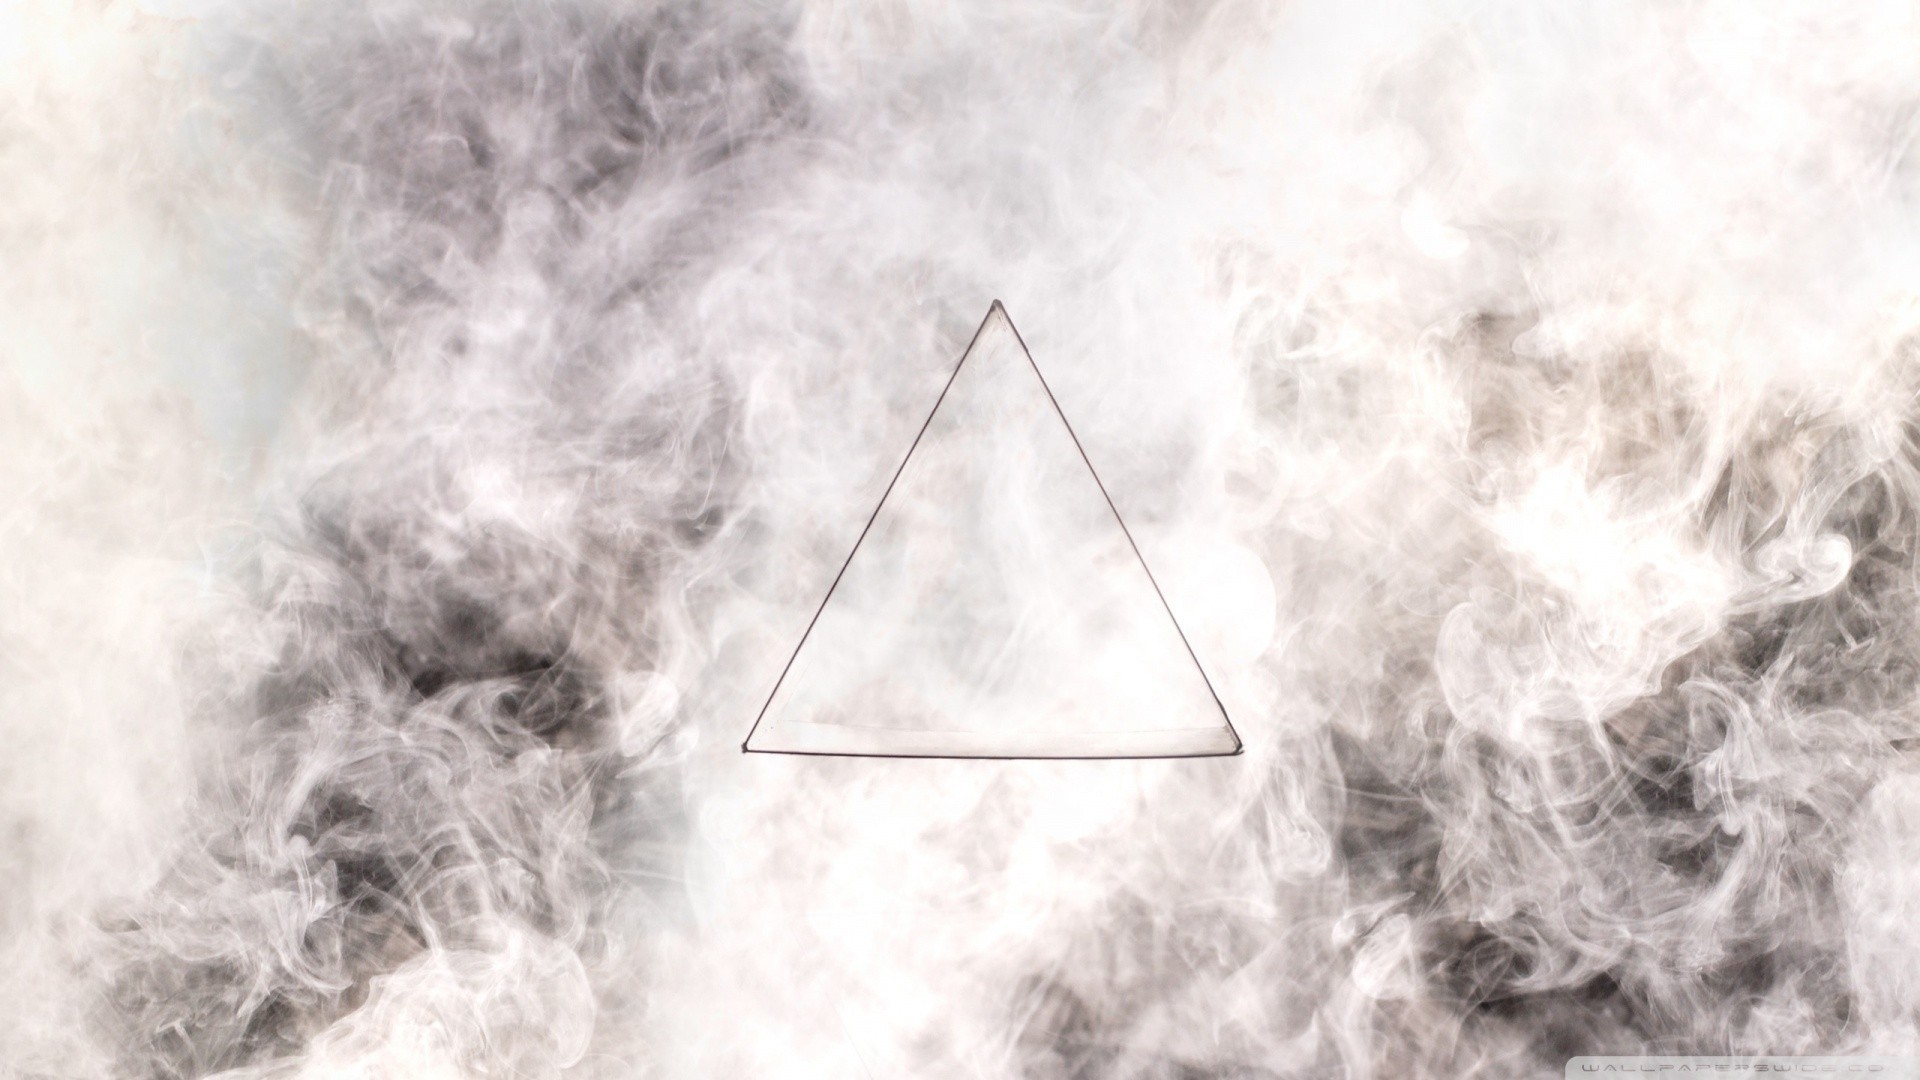 General 1920x1080 minimalism smoke abstract digital art triangle geometric figures